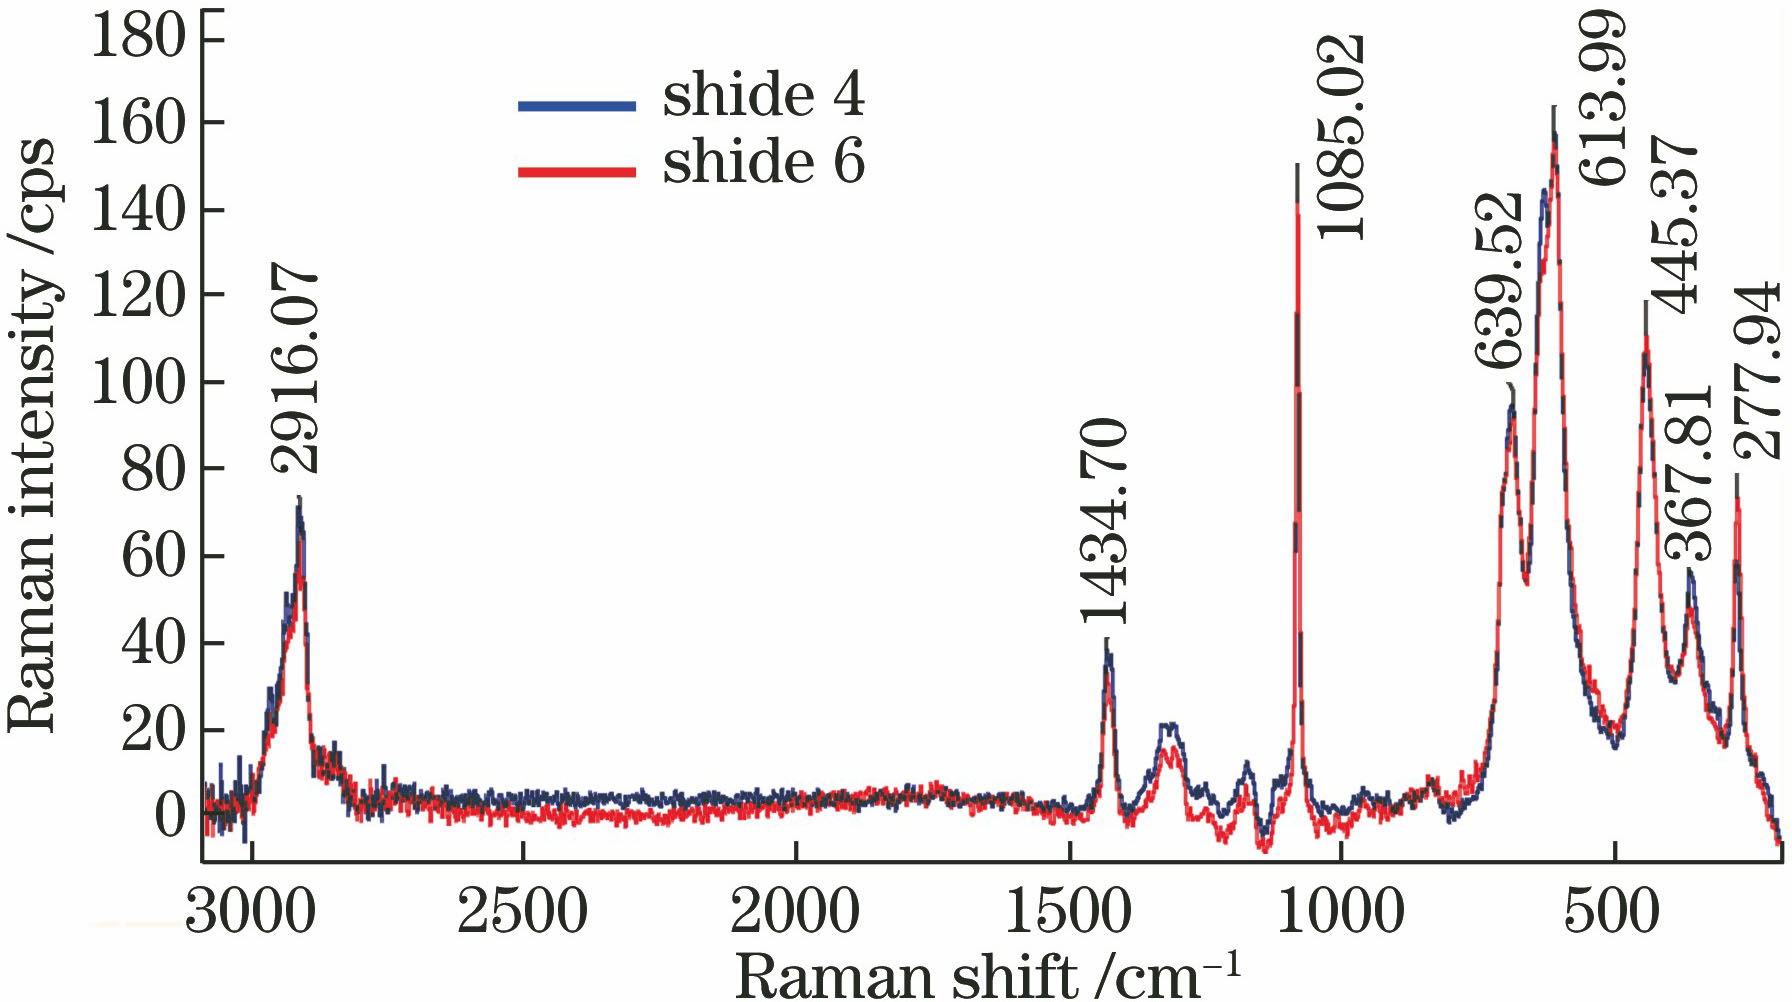 Raman spectra of Shide 4 sample and Shide 6 sample